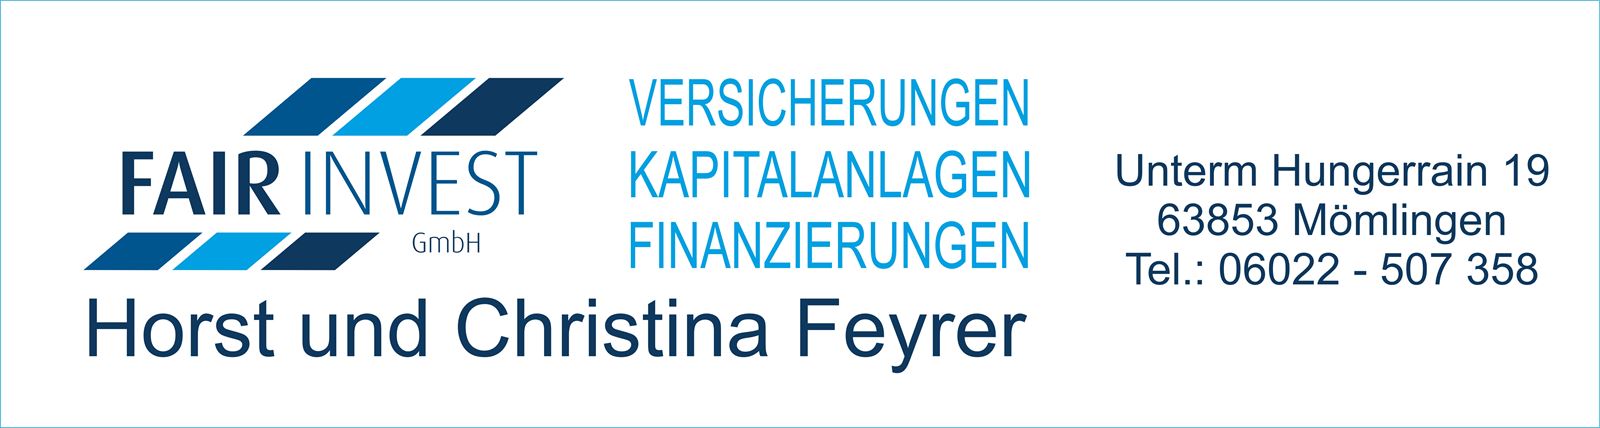 FAIR INVEST GmbH